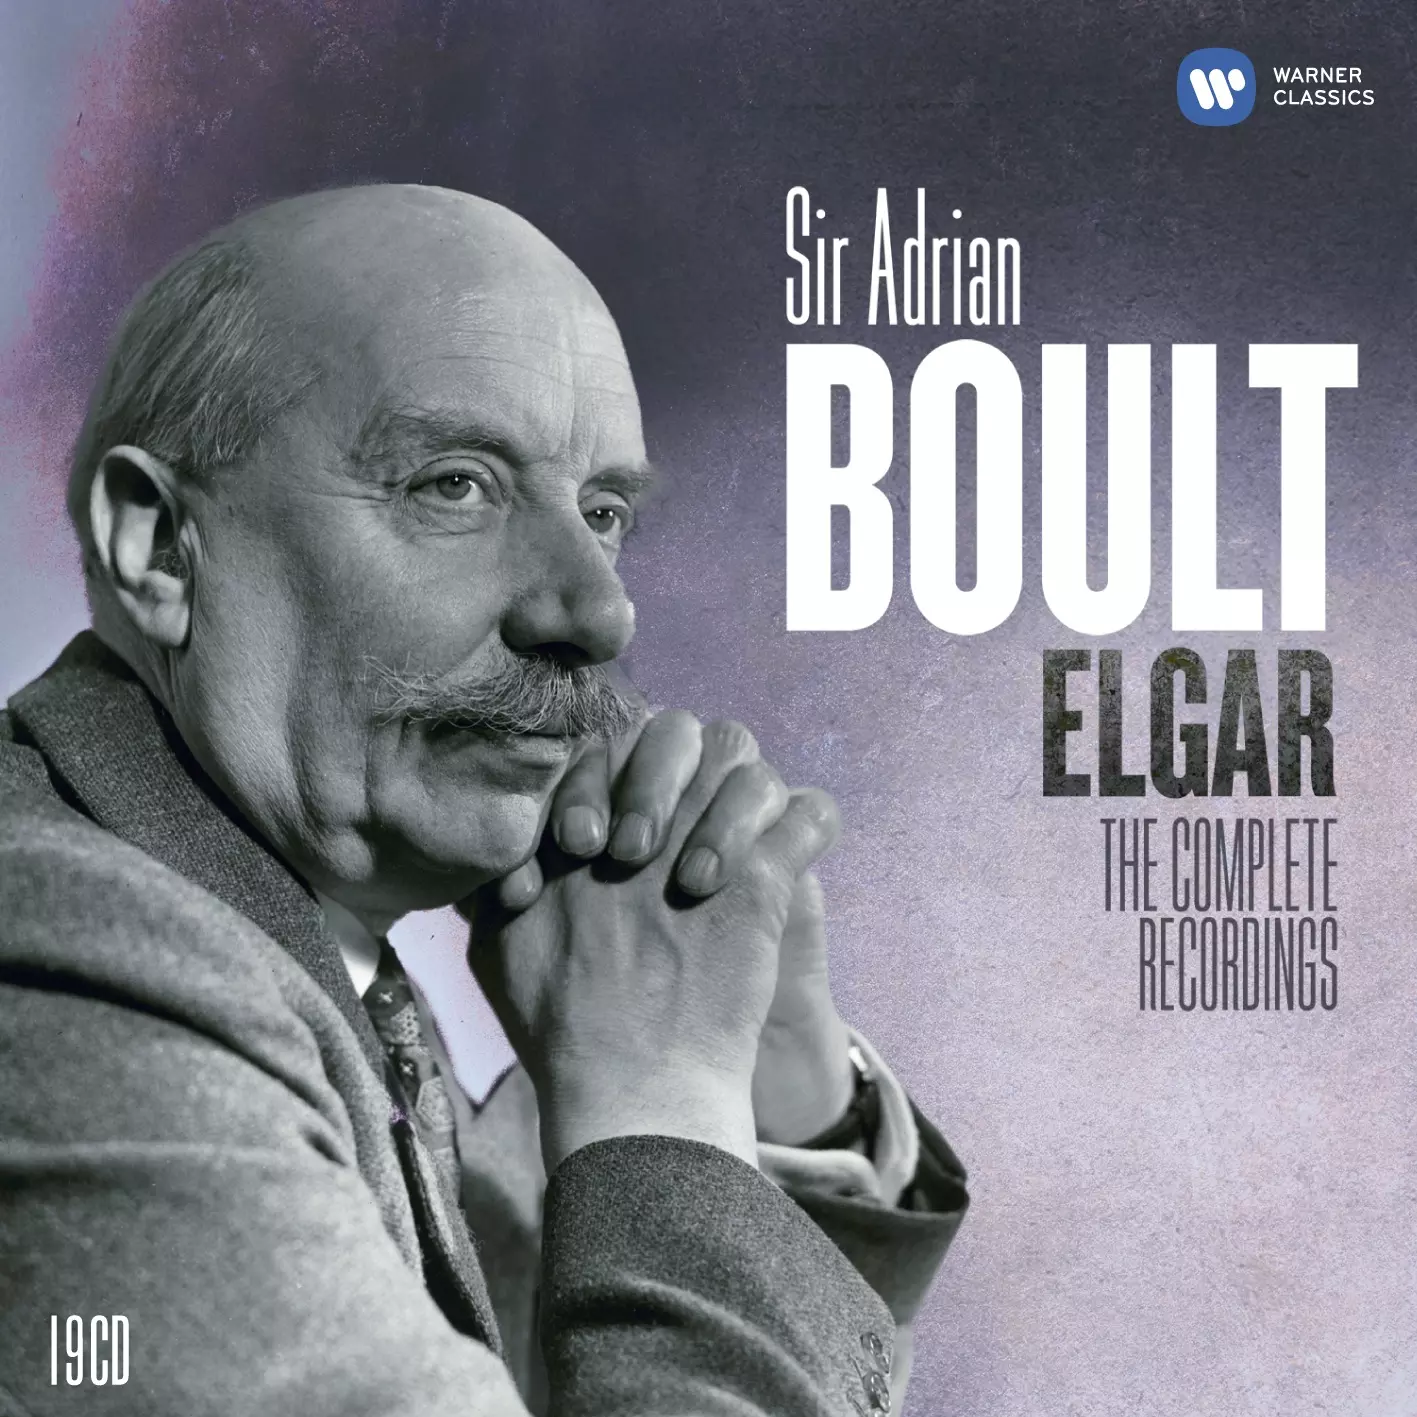 Elgar: The Complete Recordings